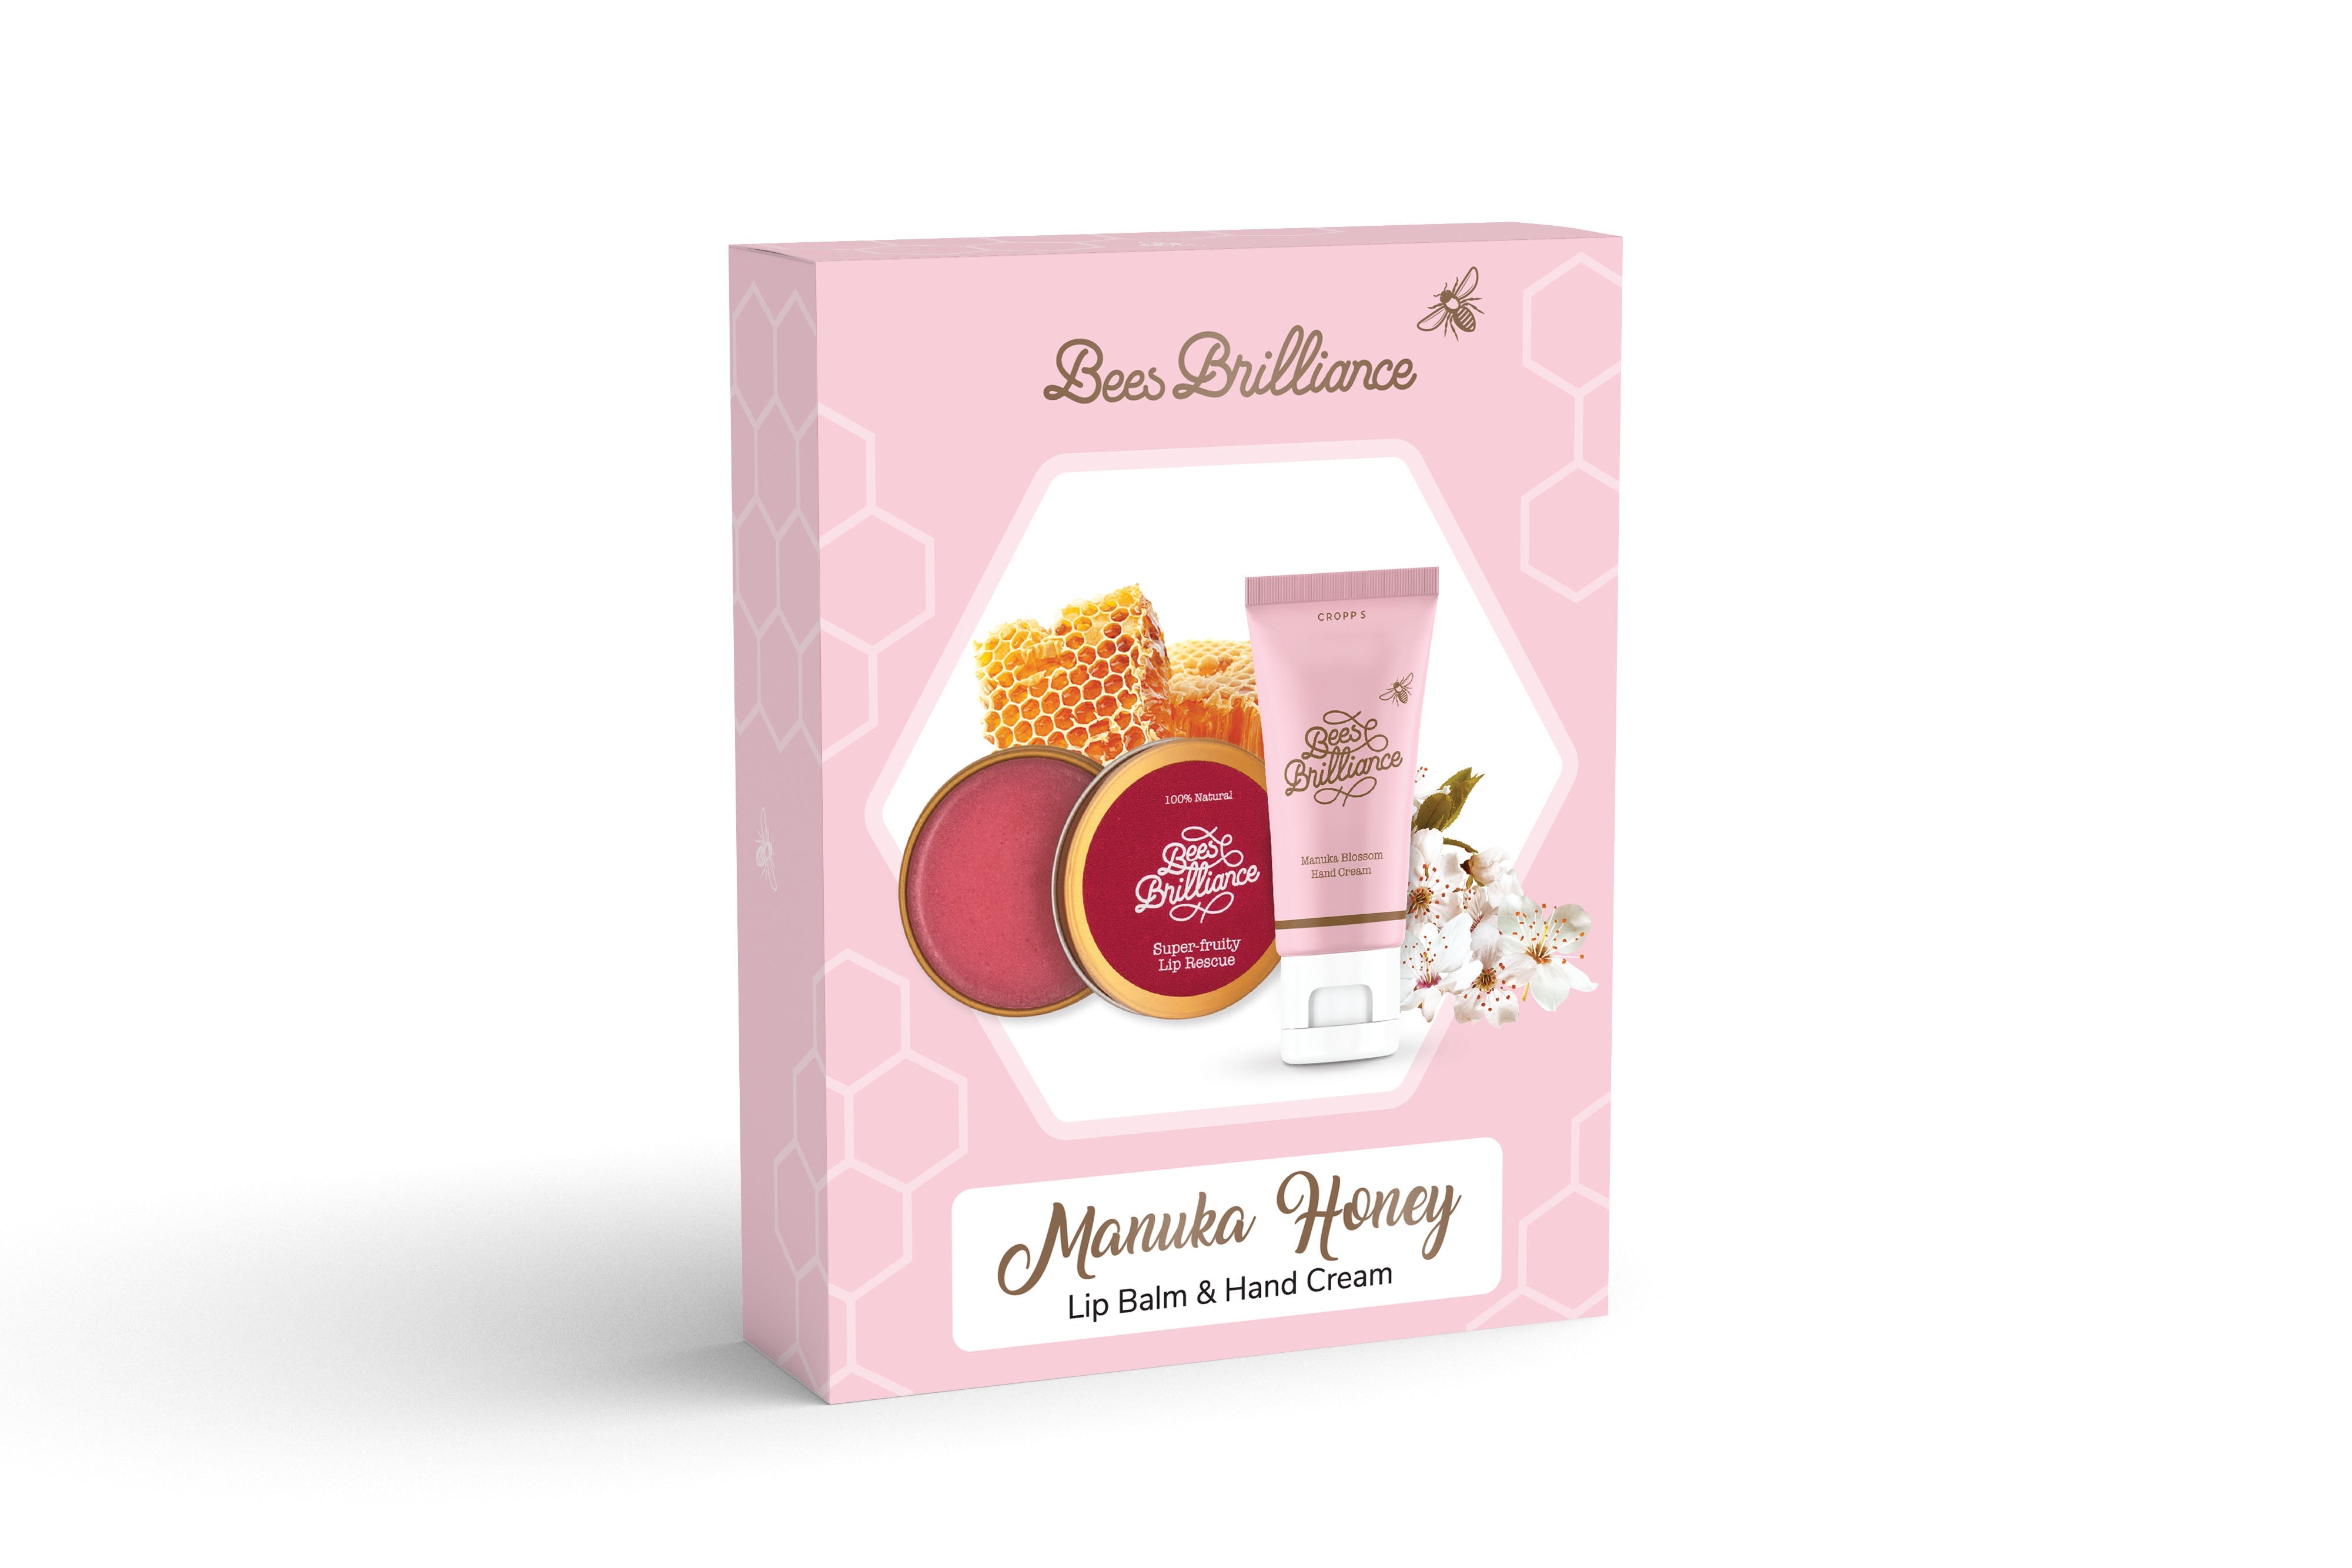 NZ Manuka Honey Hand Cream Beeswax Lip Balm Gifts